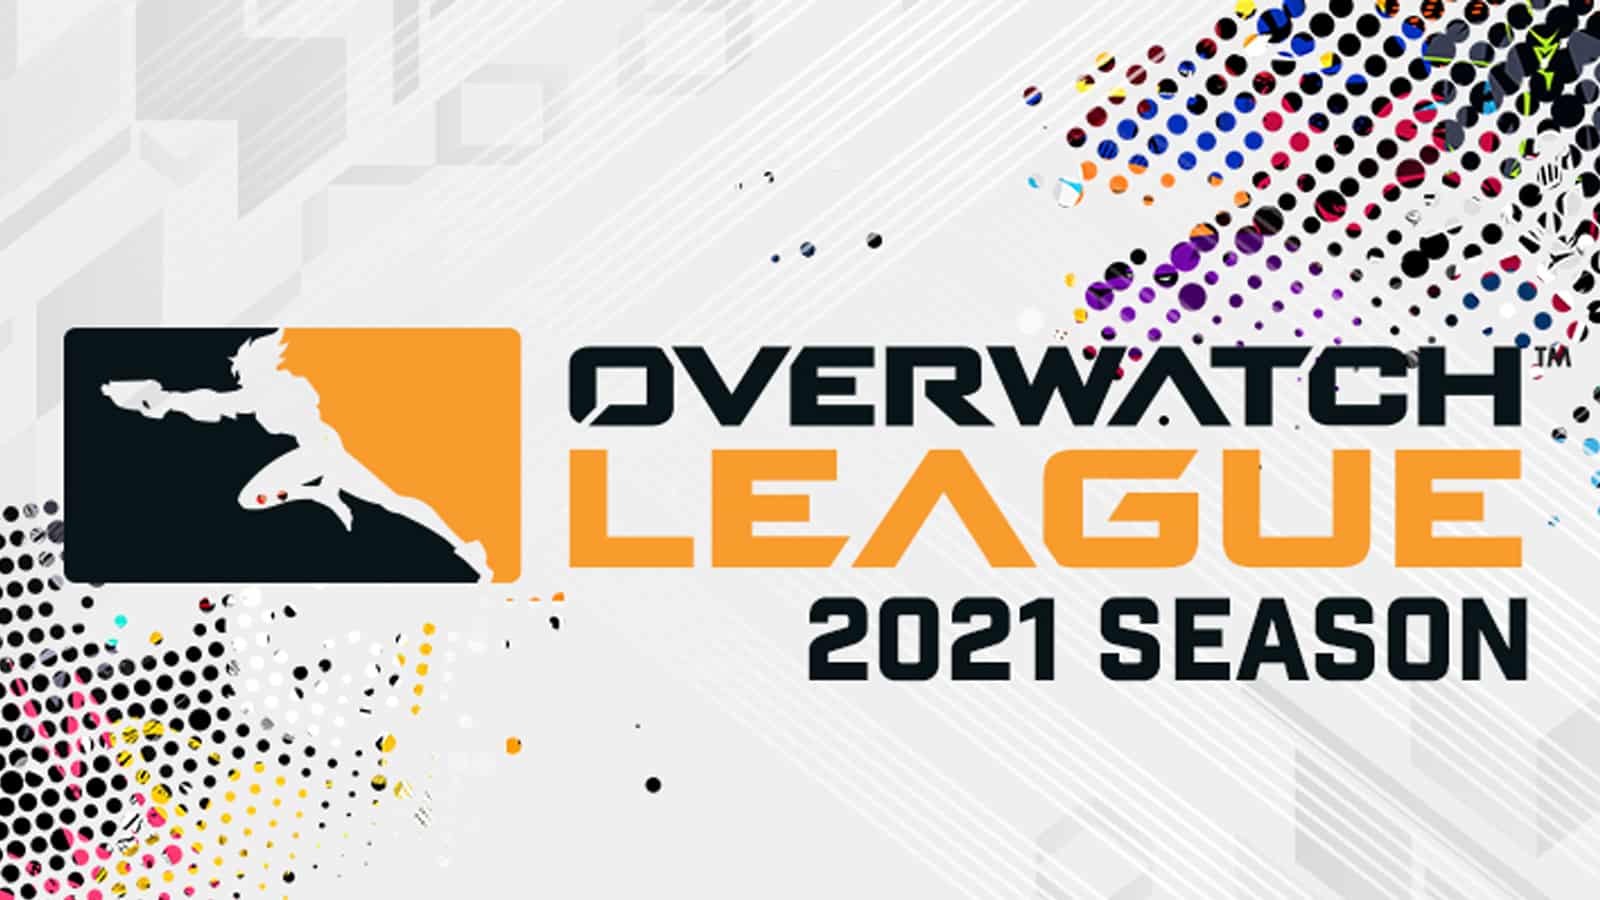 Overwatch League 2021 season graphics